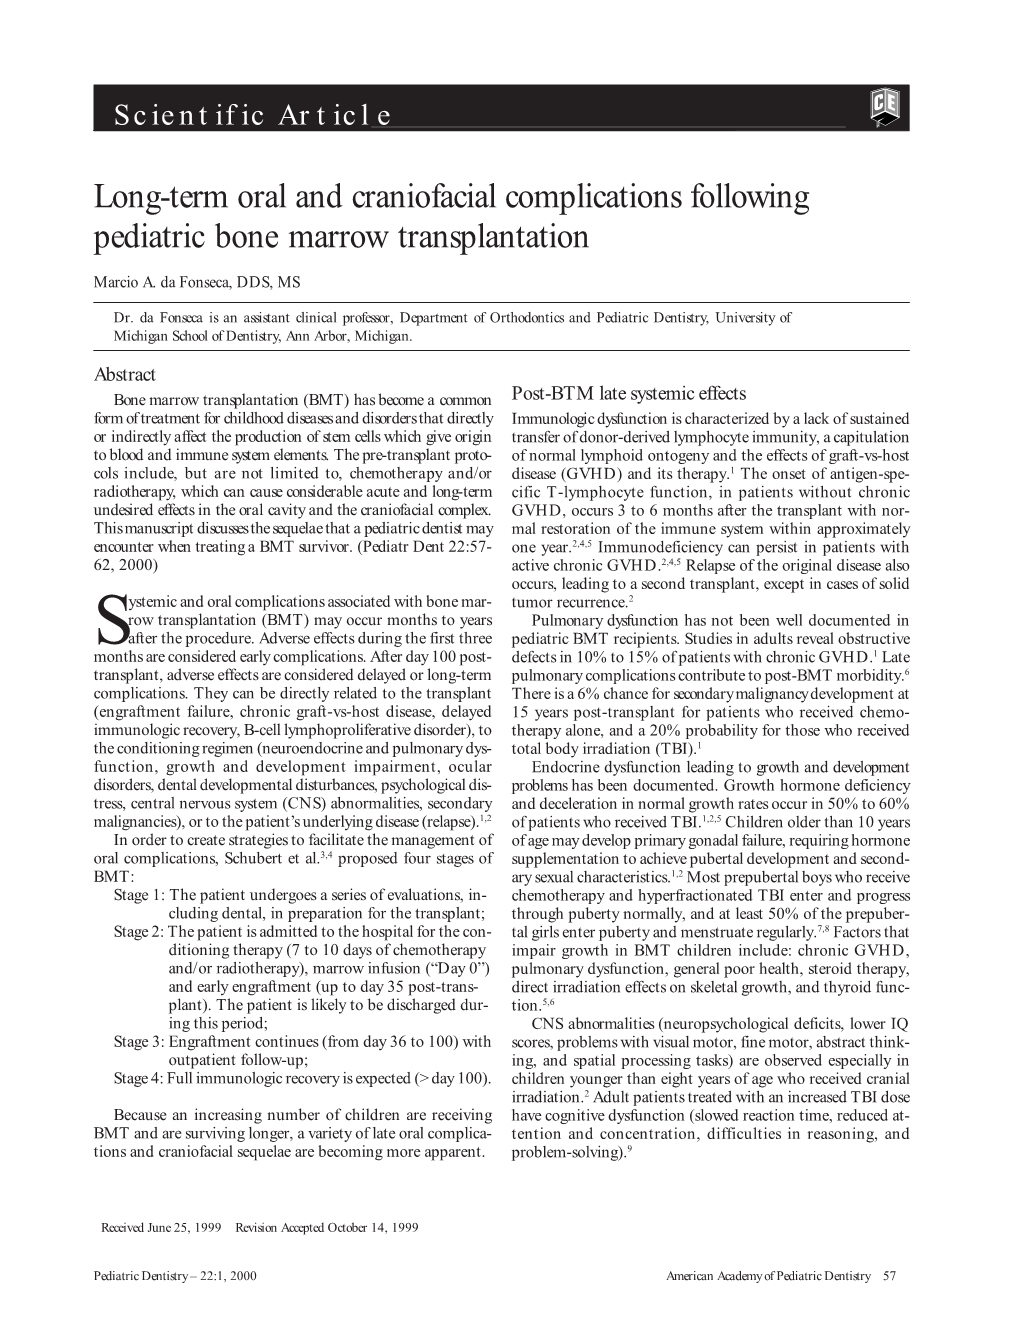 Long-Term Oral and Craniofacial Complications Following Pediatric Bone Marrow Transplantation